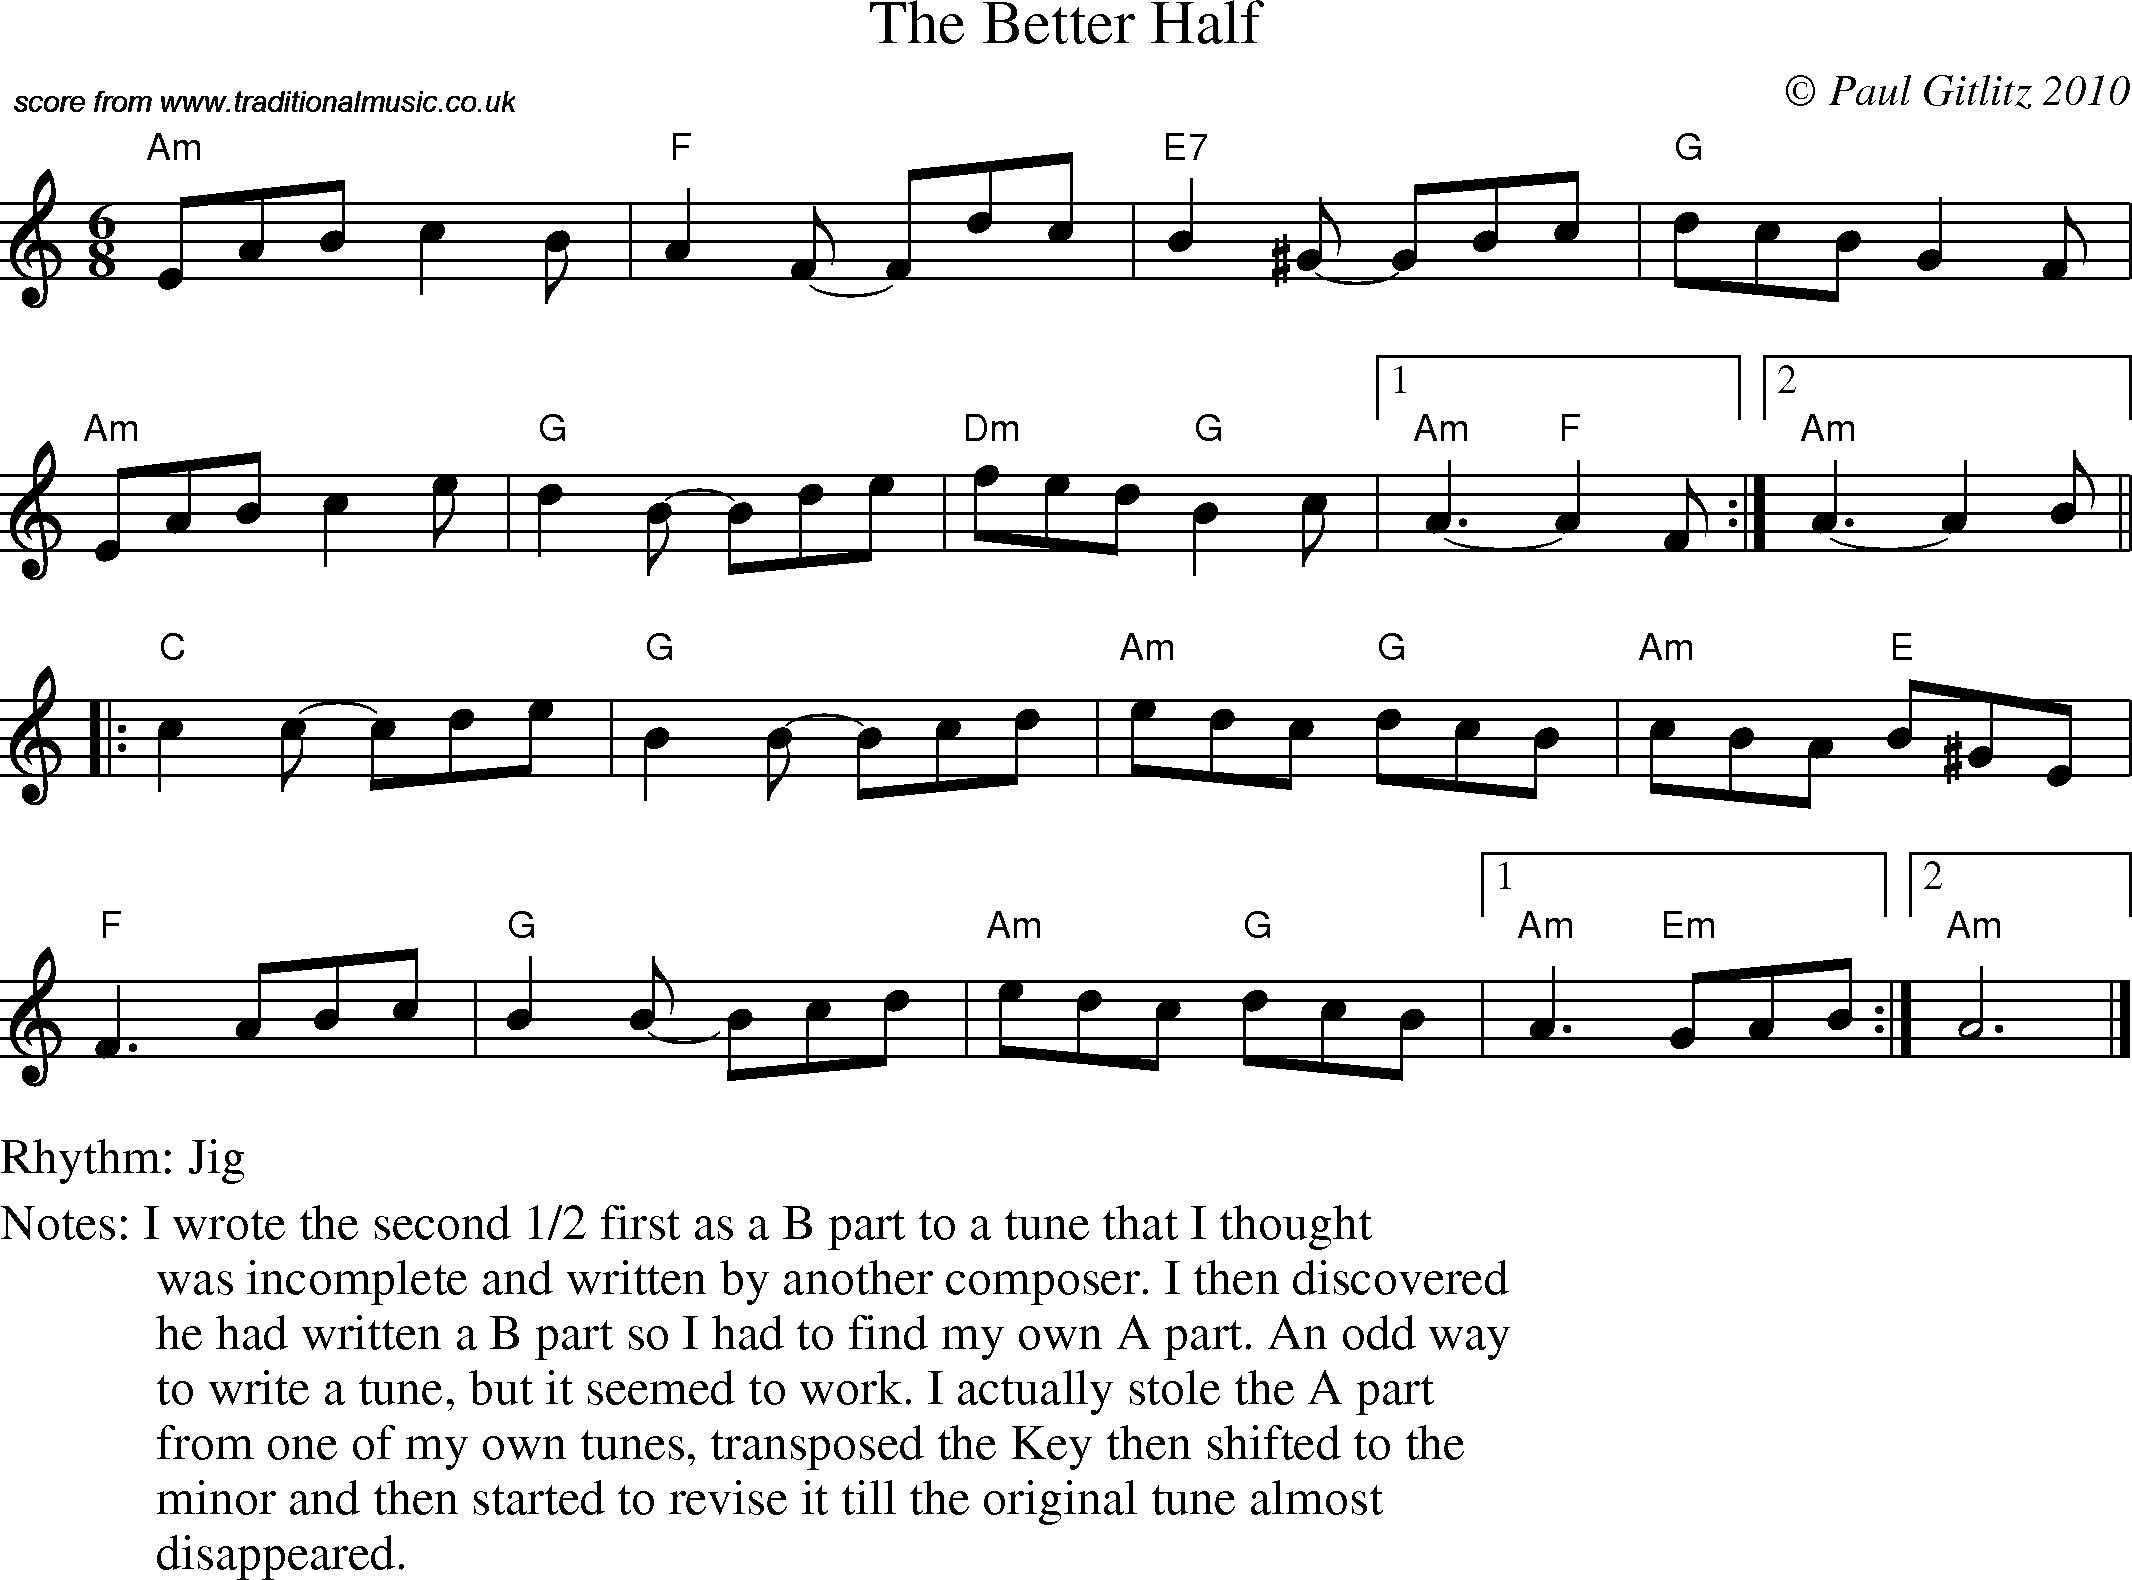 Sheet Music Score for Jig - Better Half, The